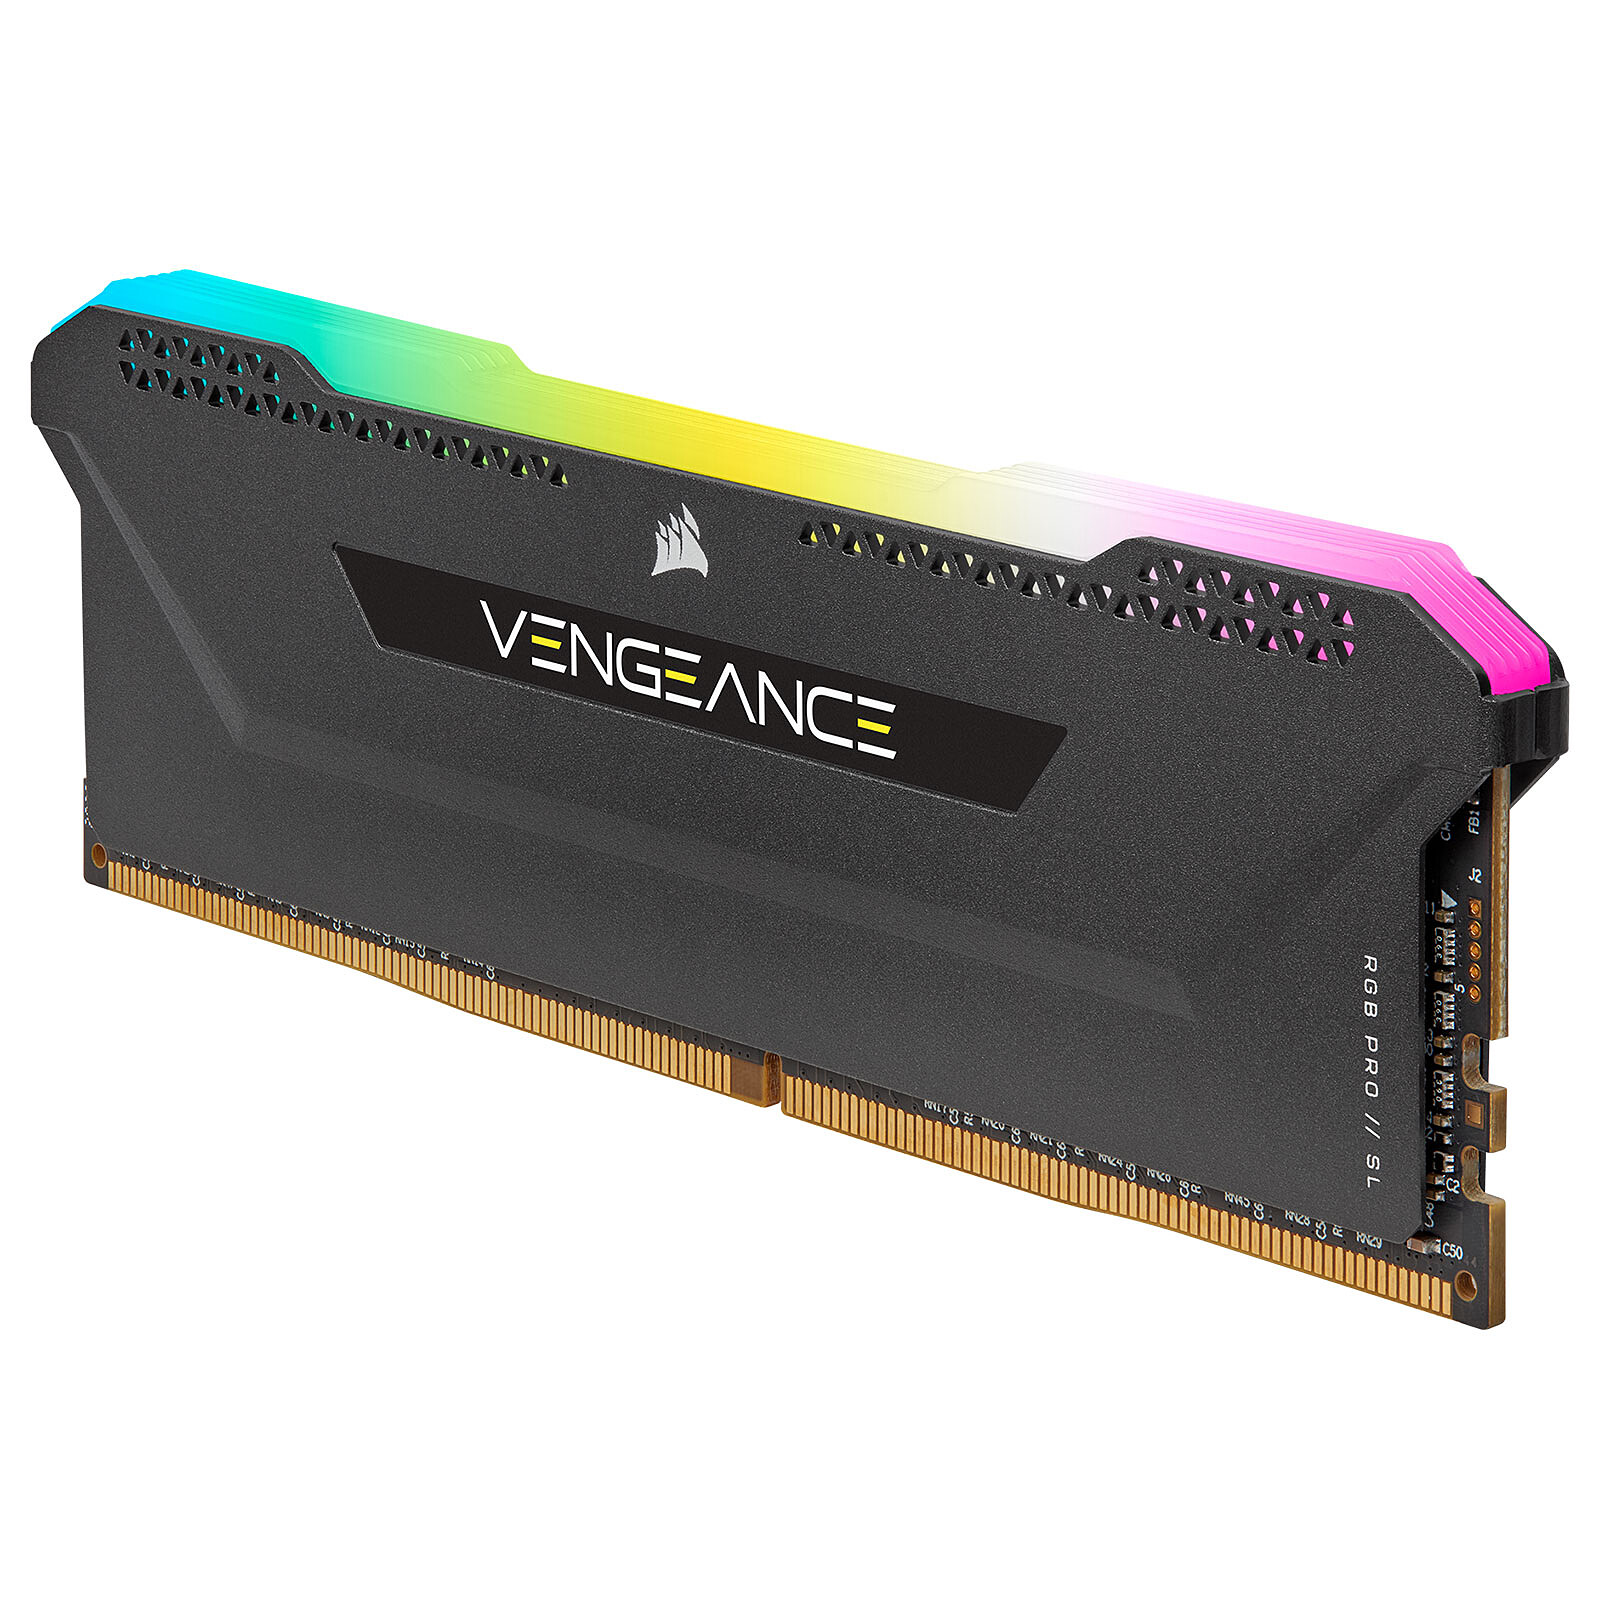 VENGEANCE RGB PRO SL 32GB (2x16GB) DDR4 DRAM 3200MHz C16 Memory